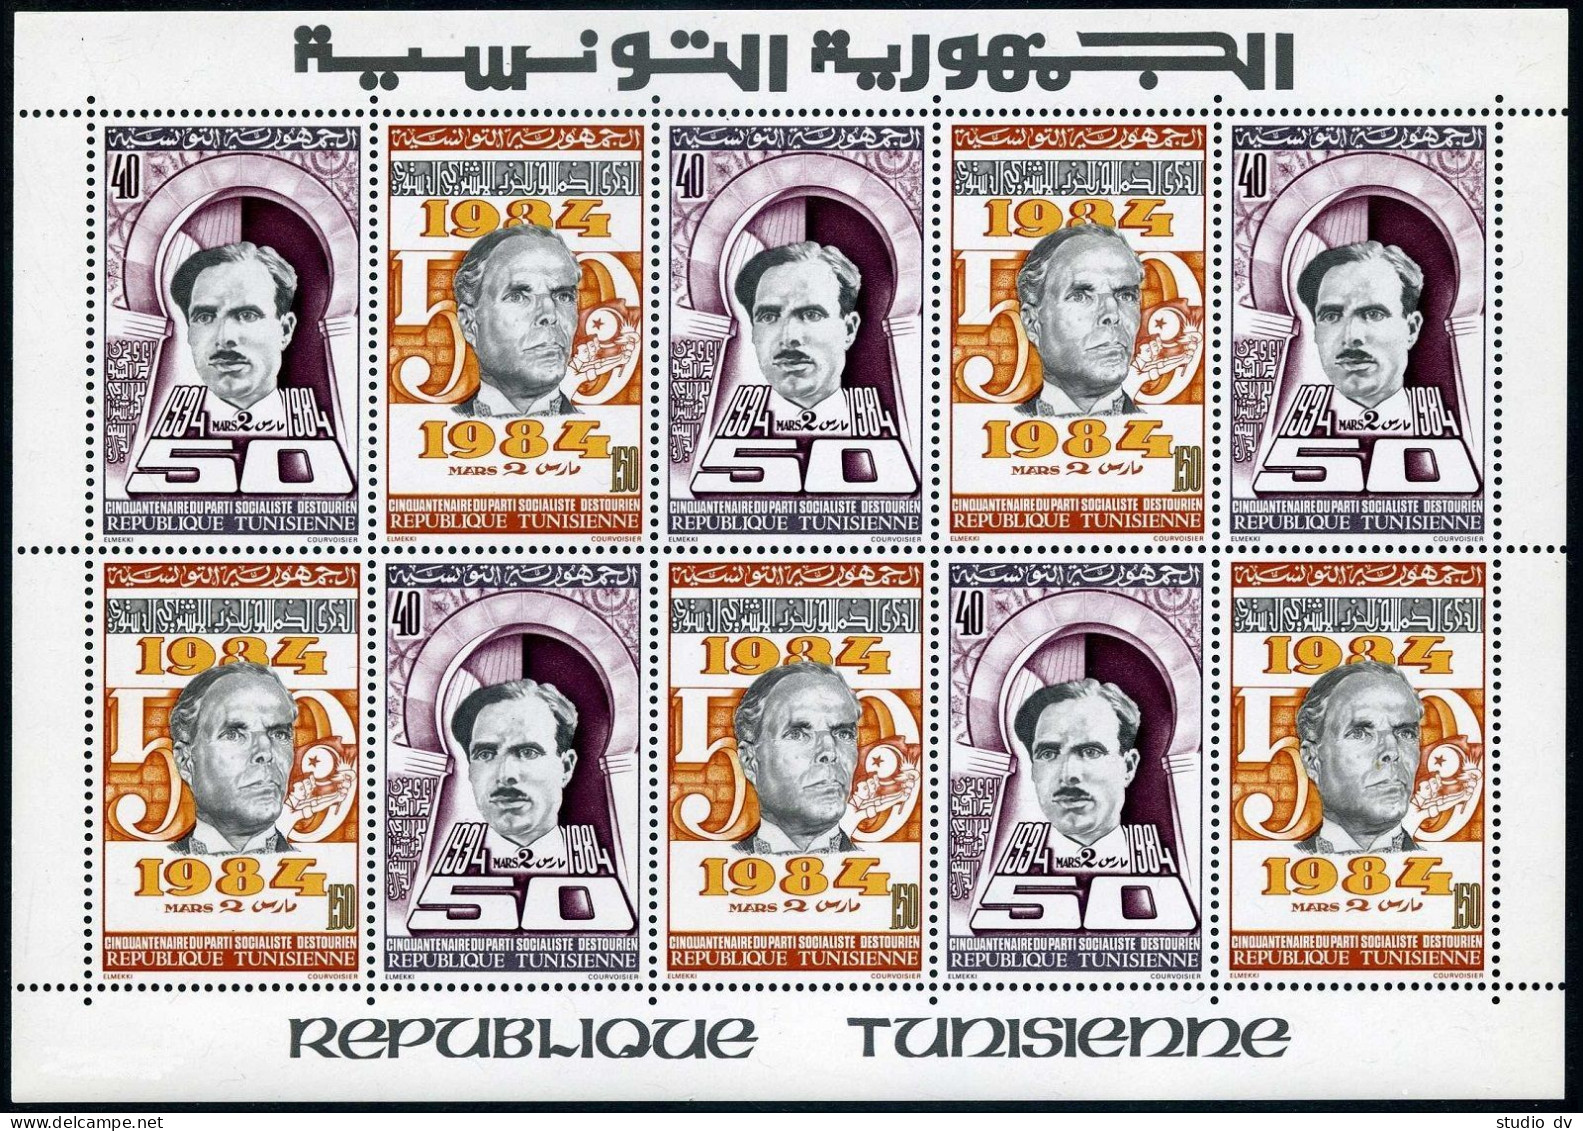 Tunisia 842-847a Six Sheets,MNH. Destourien Socialist Party,5,1984.Bourguiba. - Tunisia